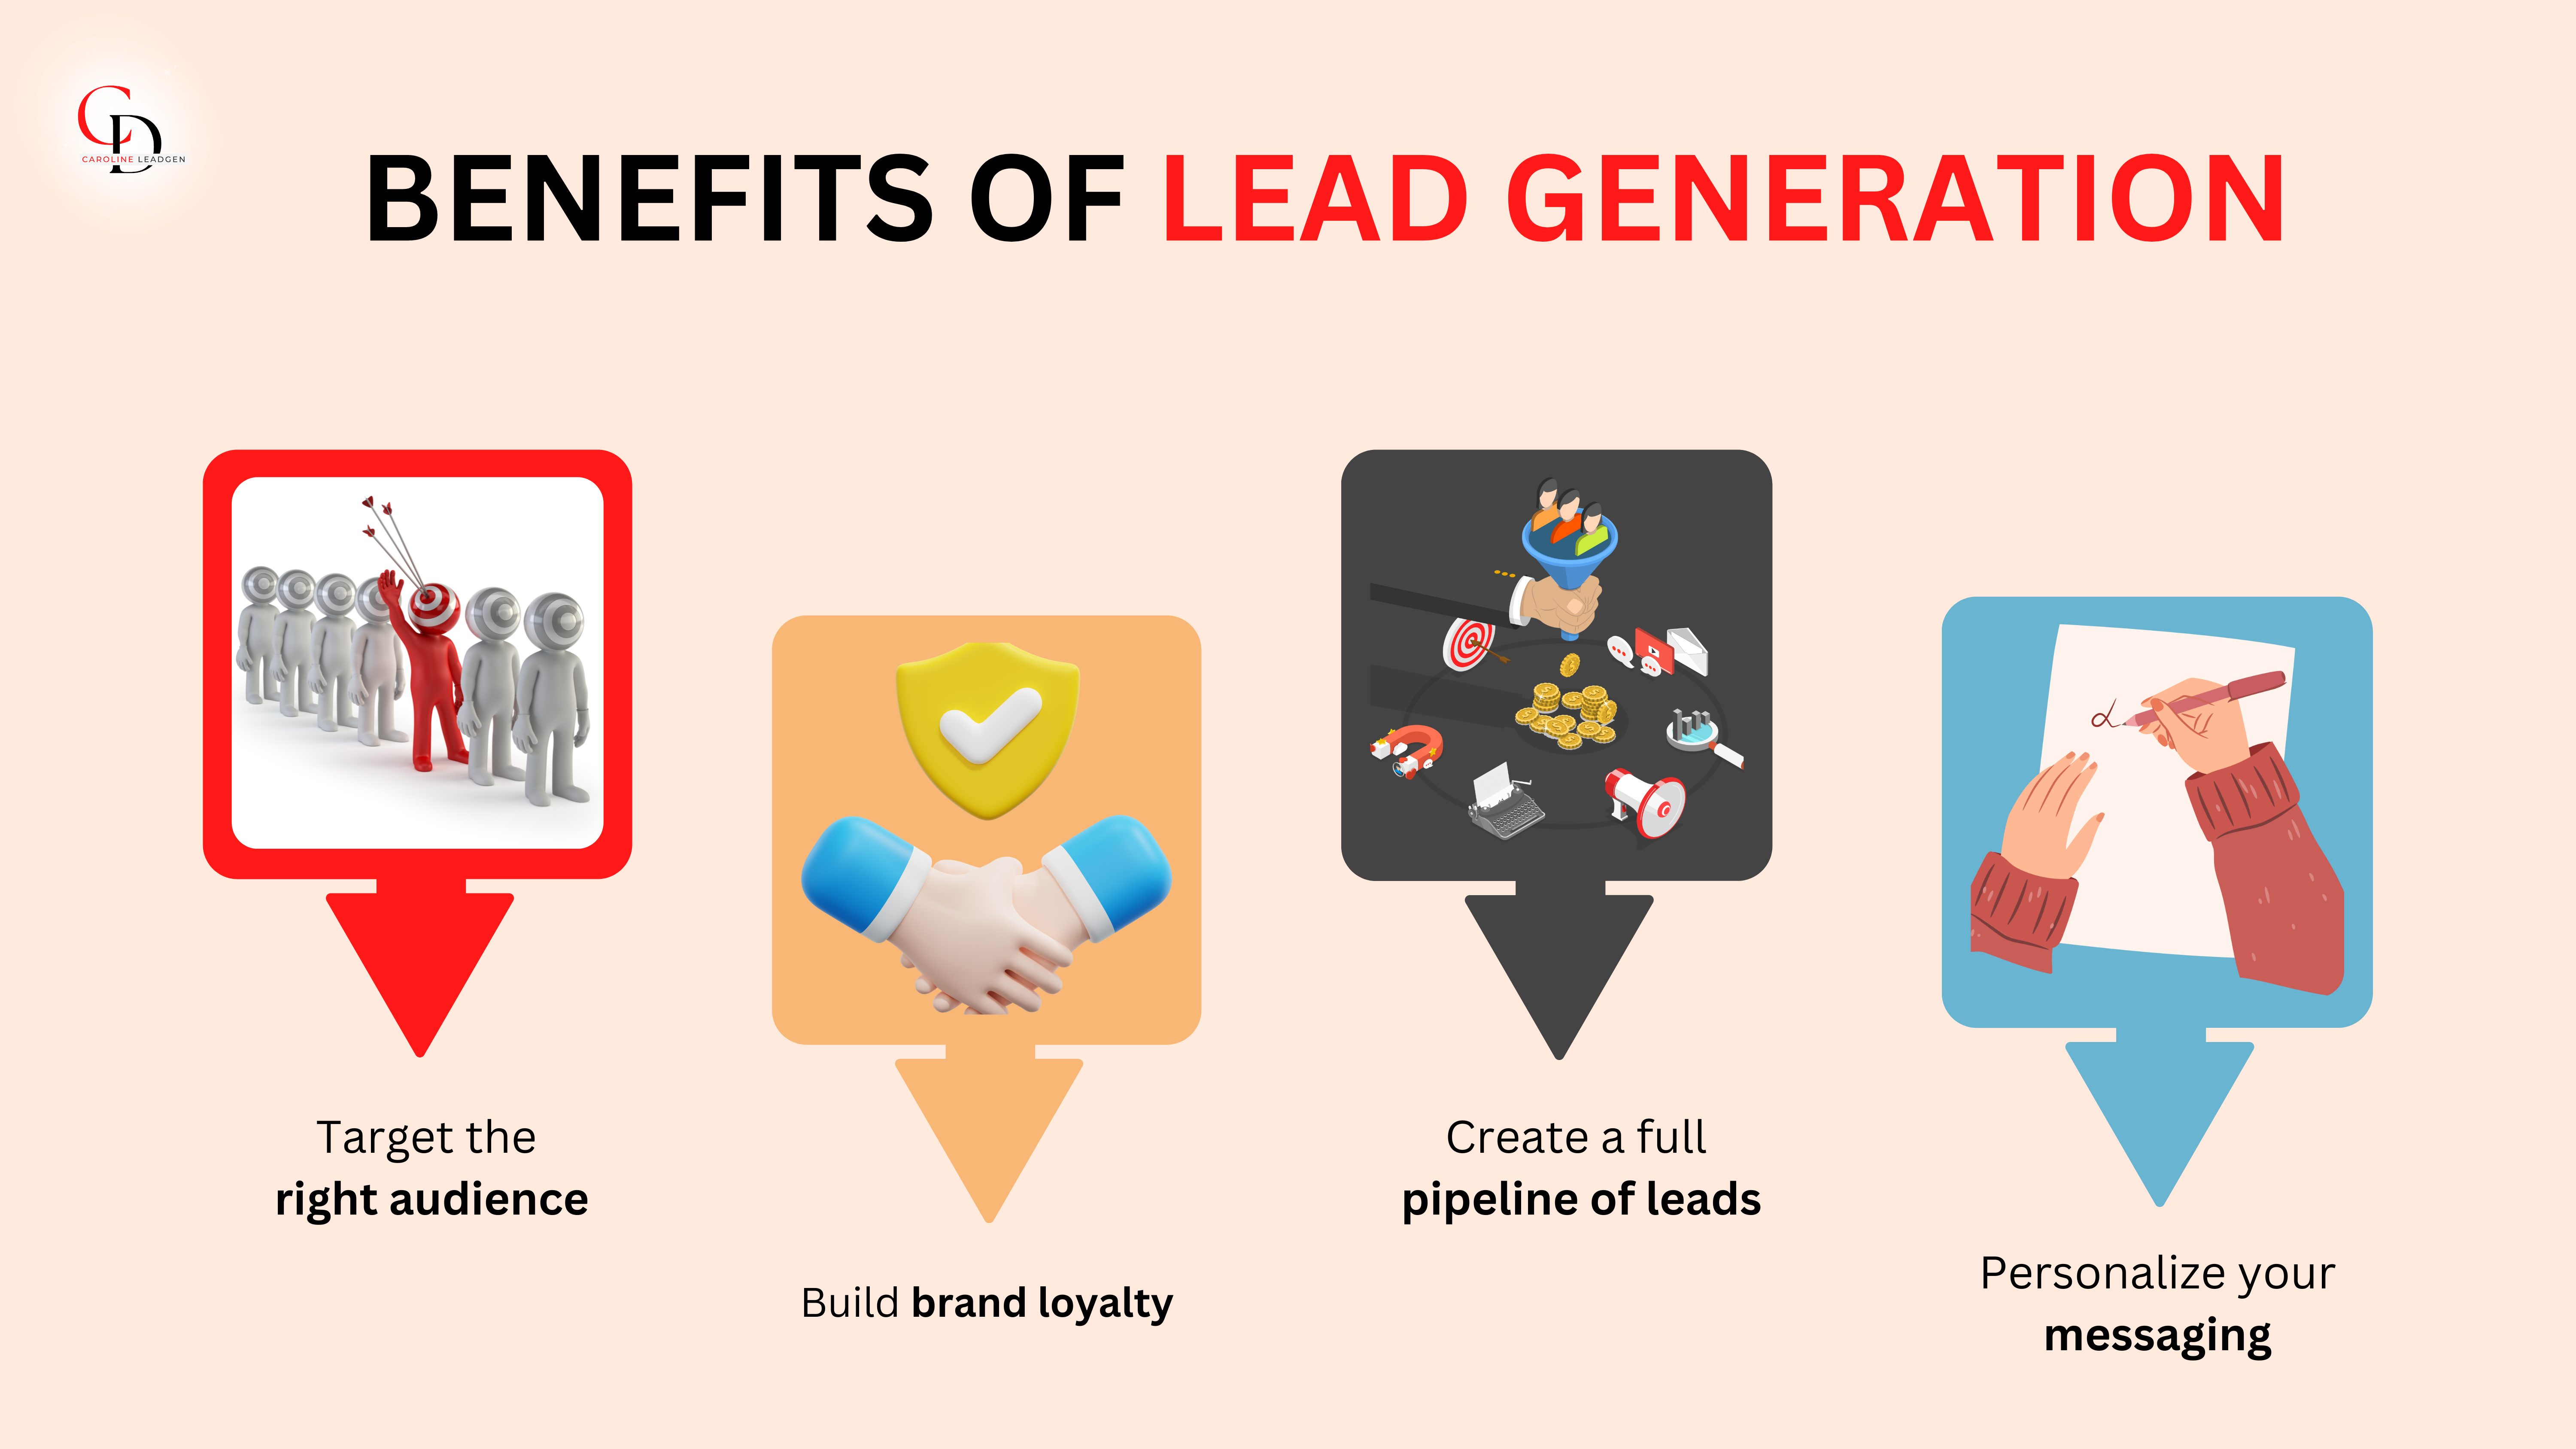 Lead Generation Benefits